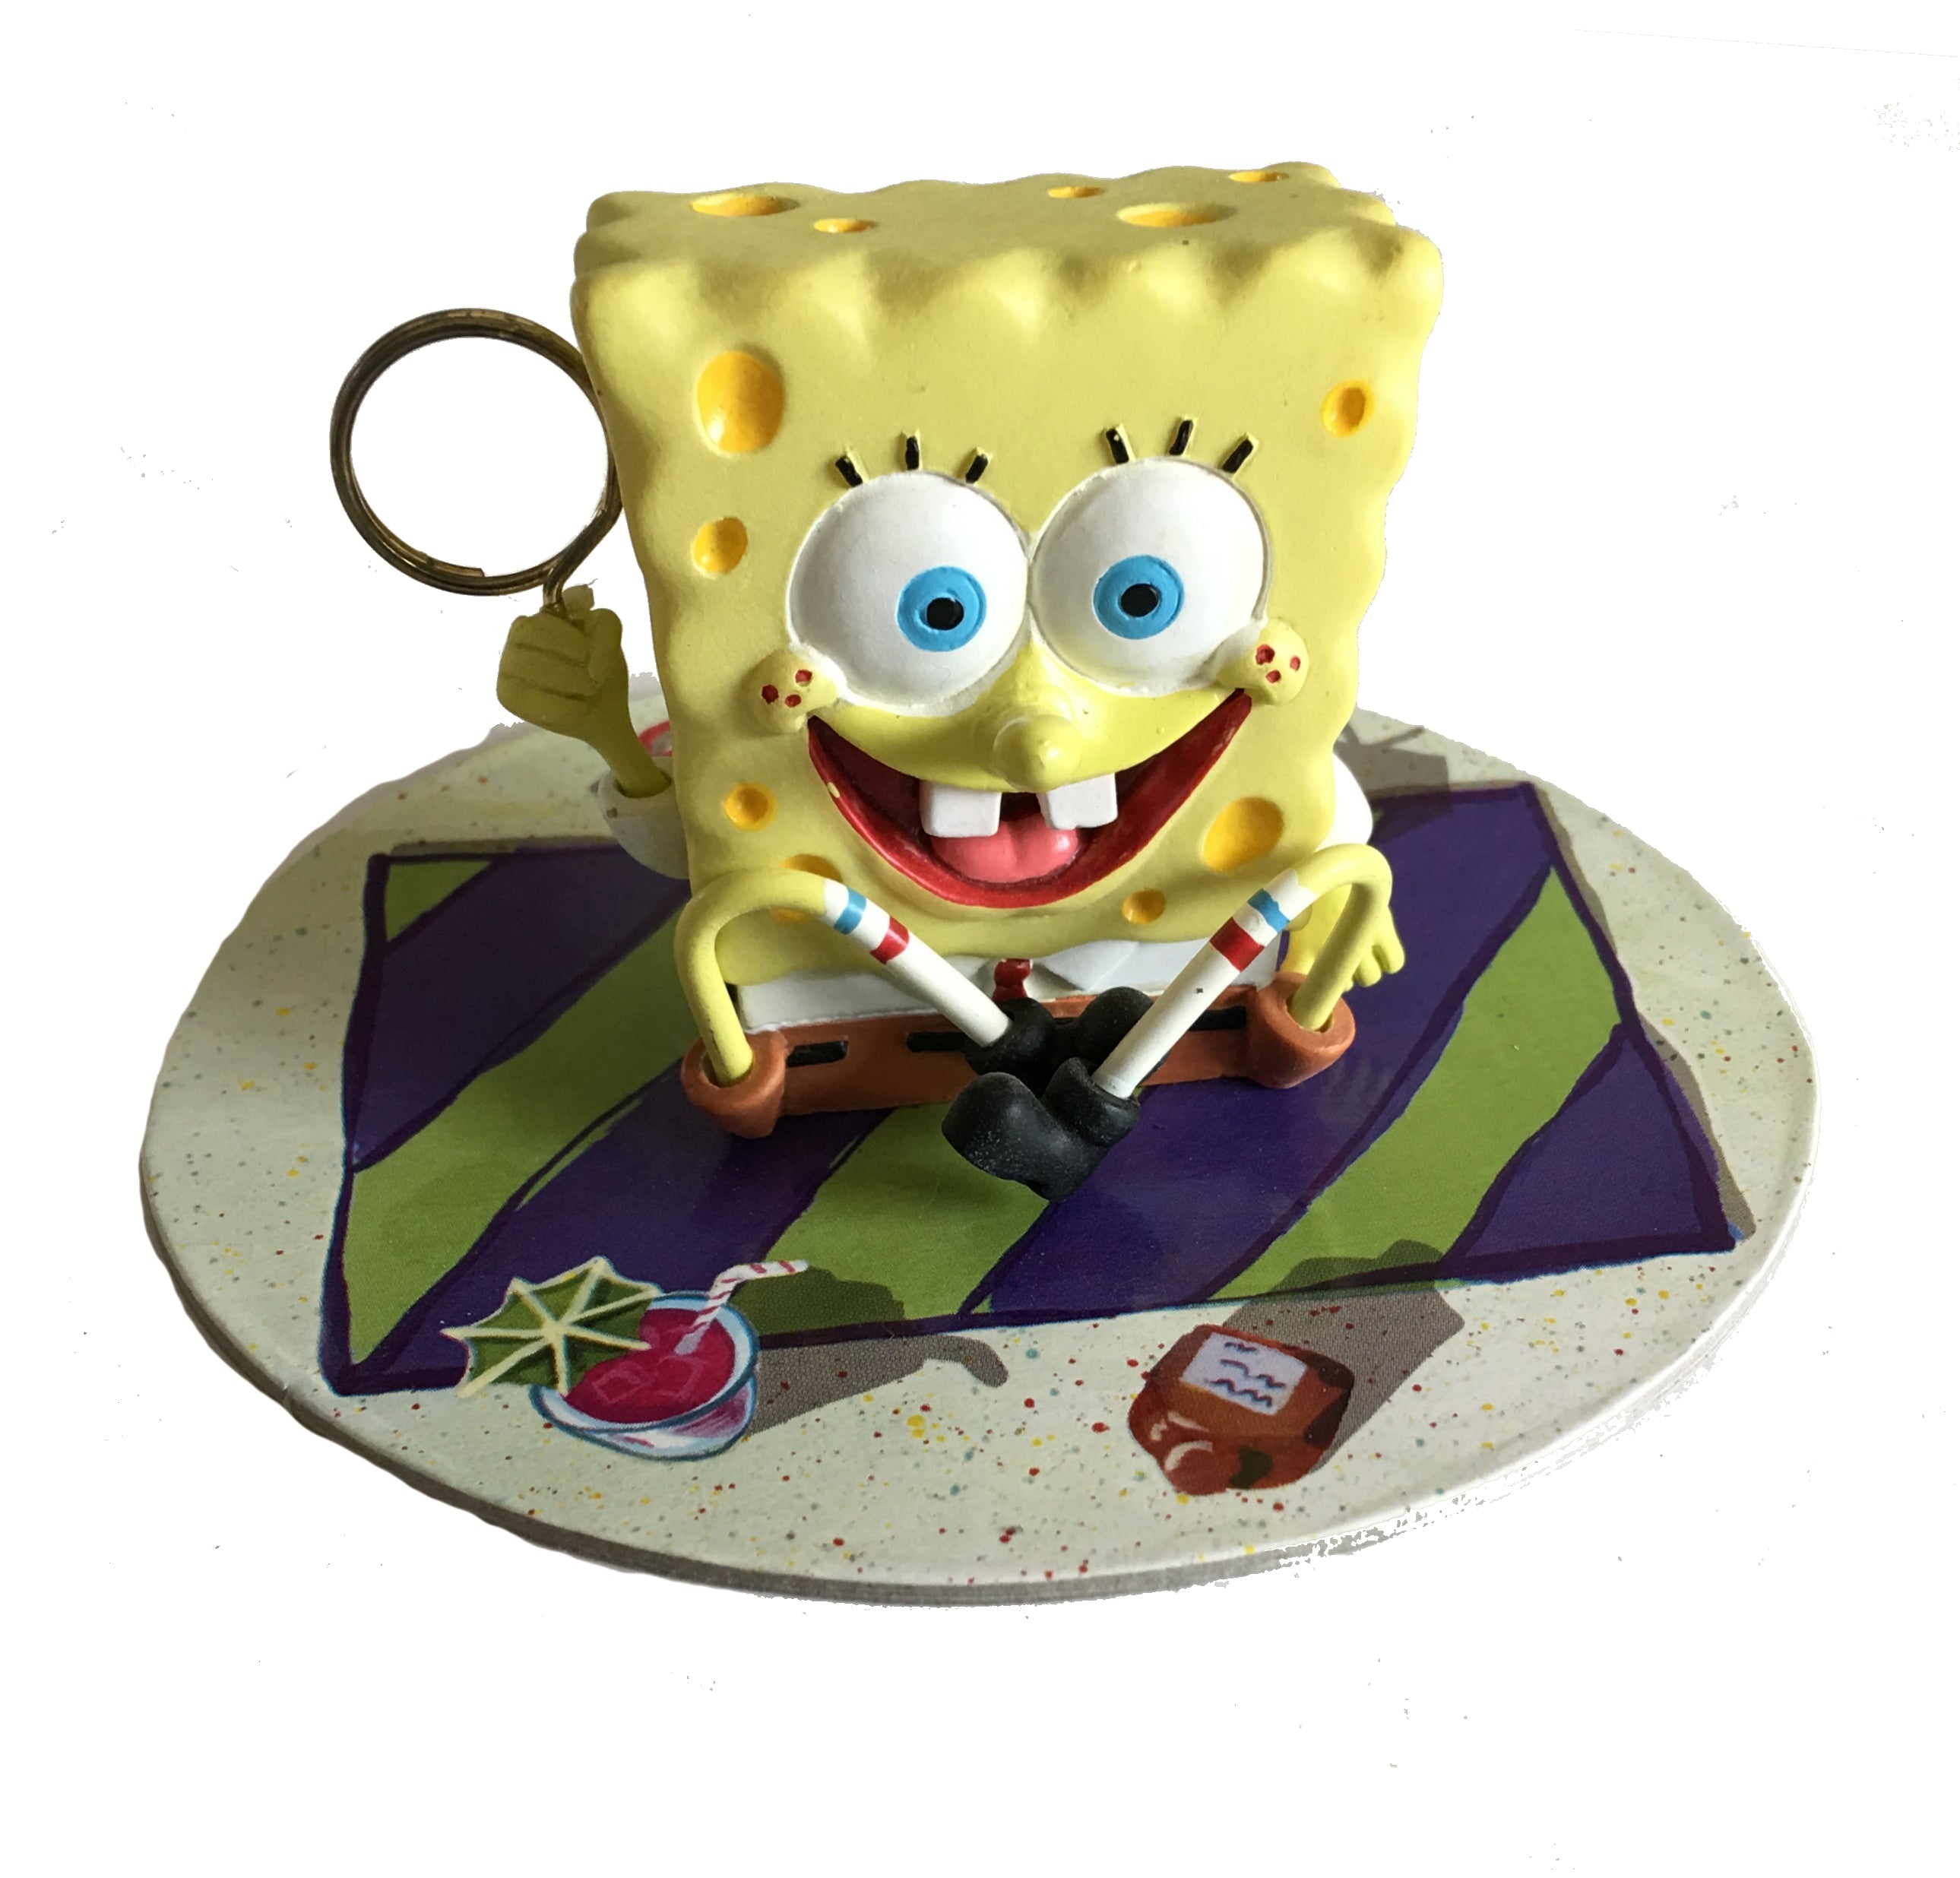  Spongebob Party Supplies Set Serves 16 Guests Spongebob  Party Decorations